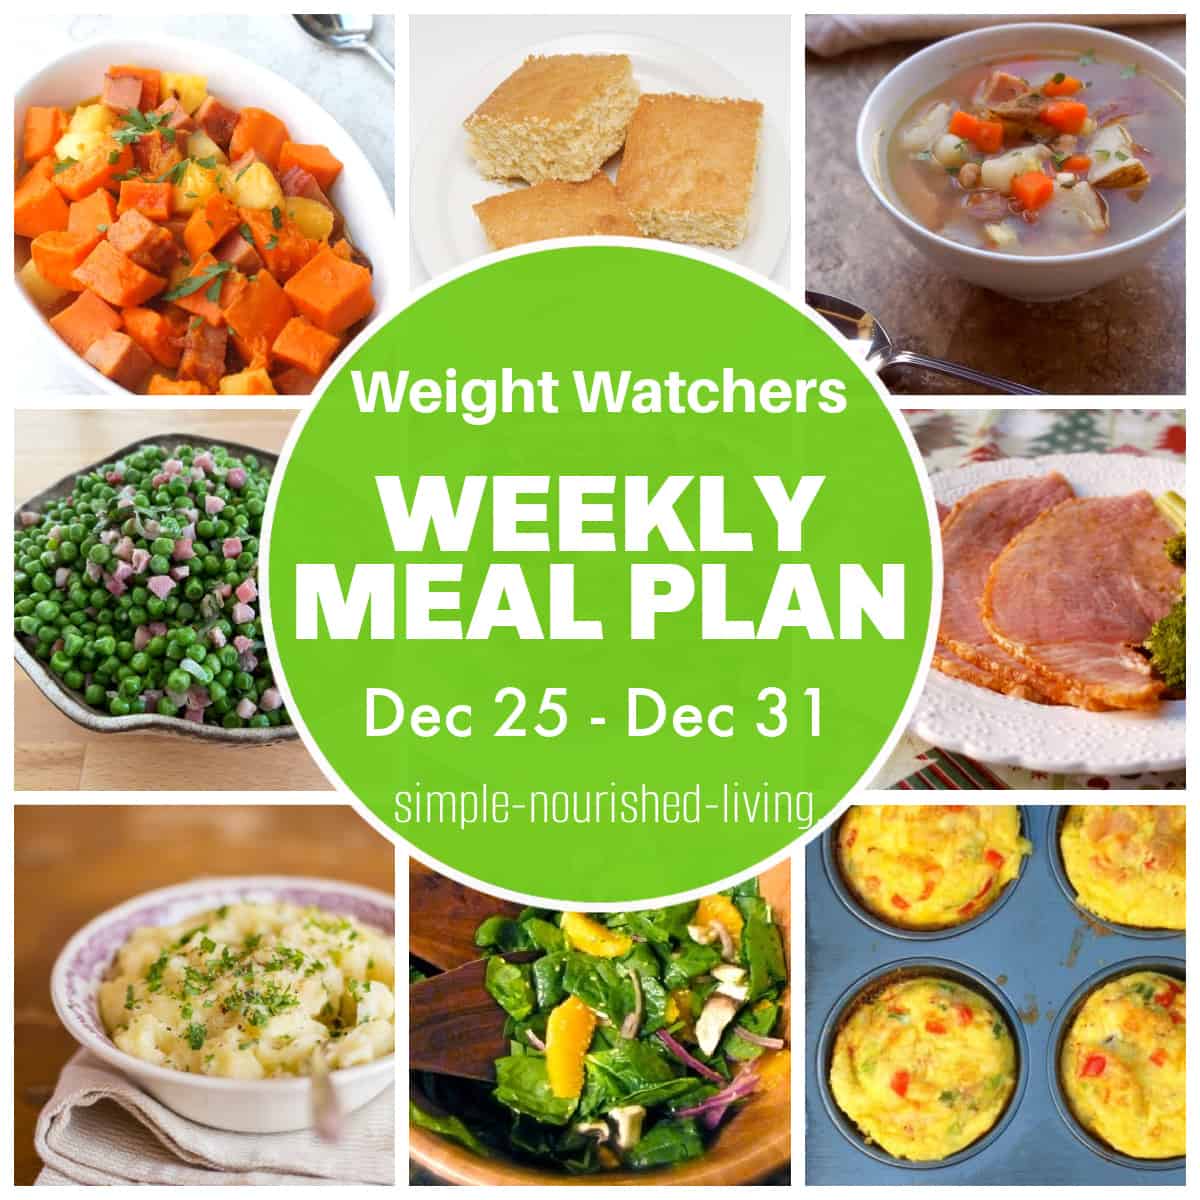 WW Weekly Meal Plan Dec 25